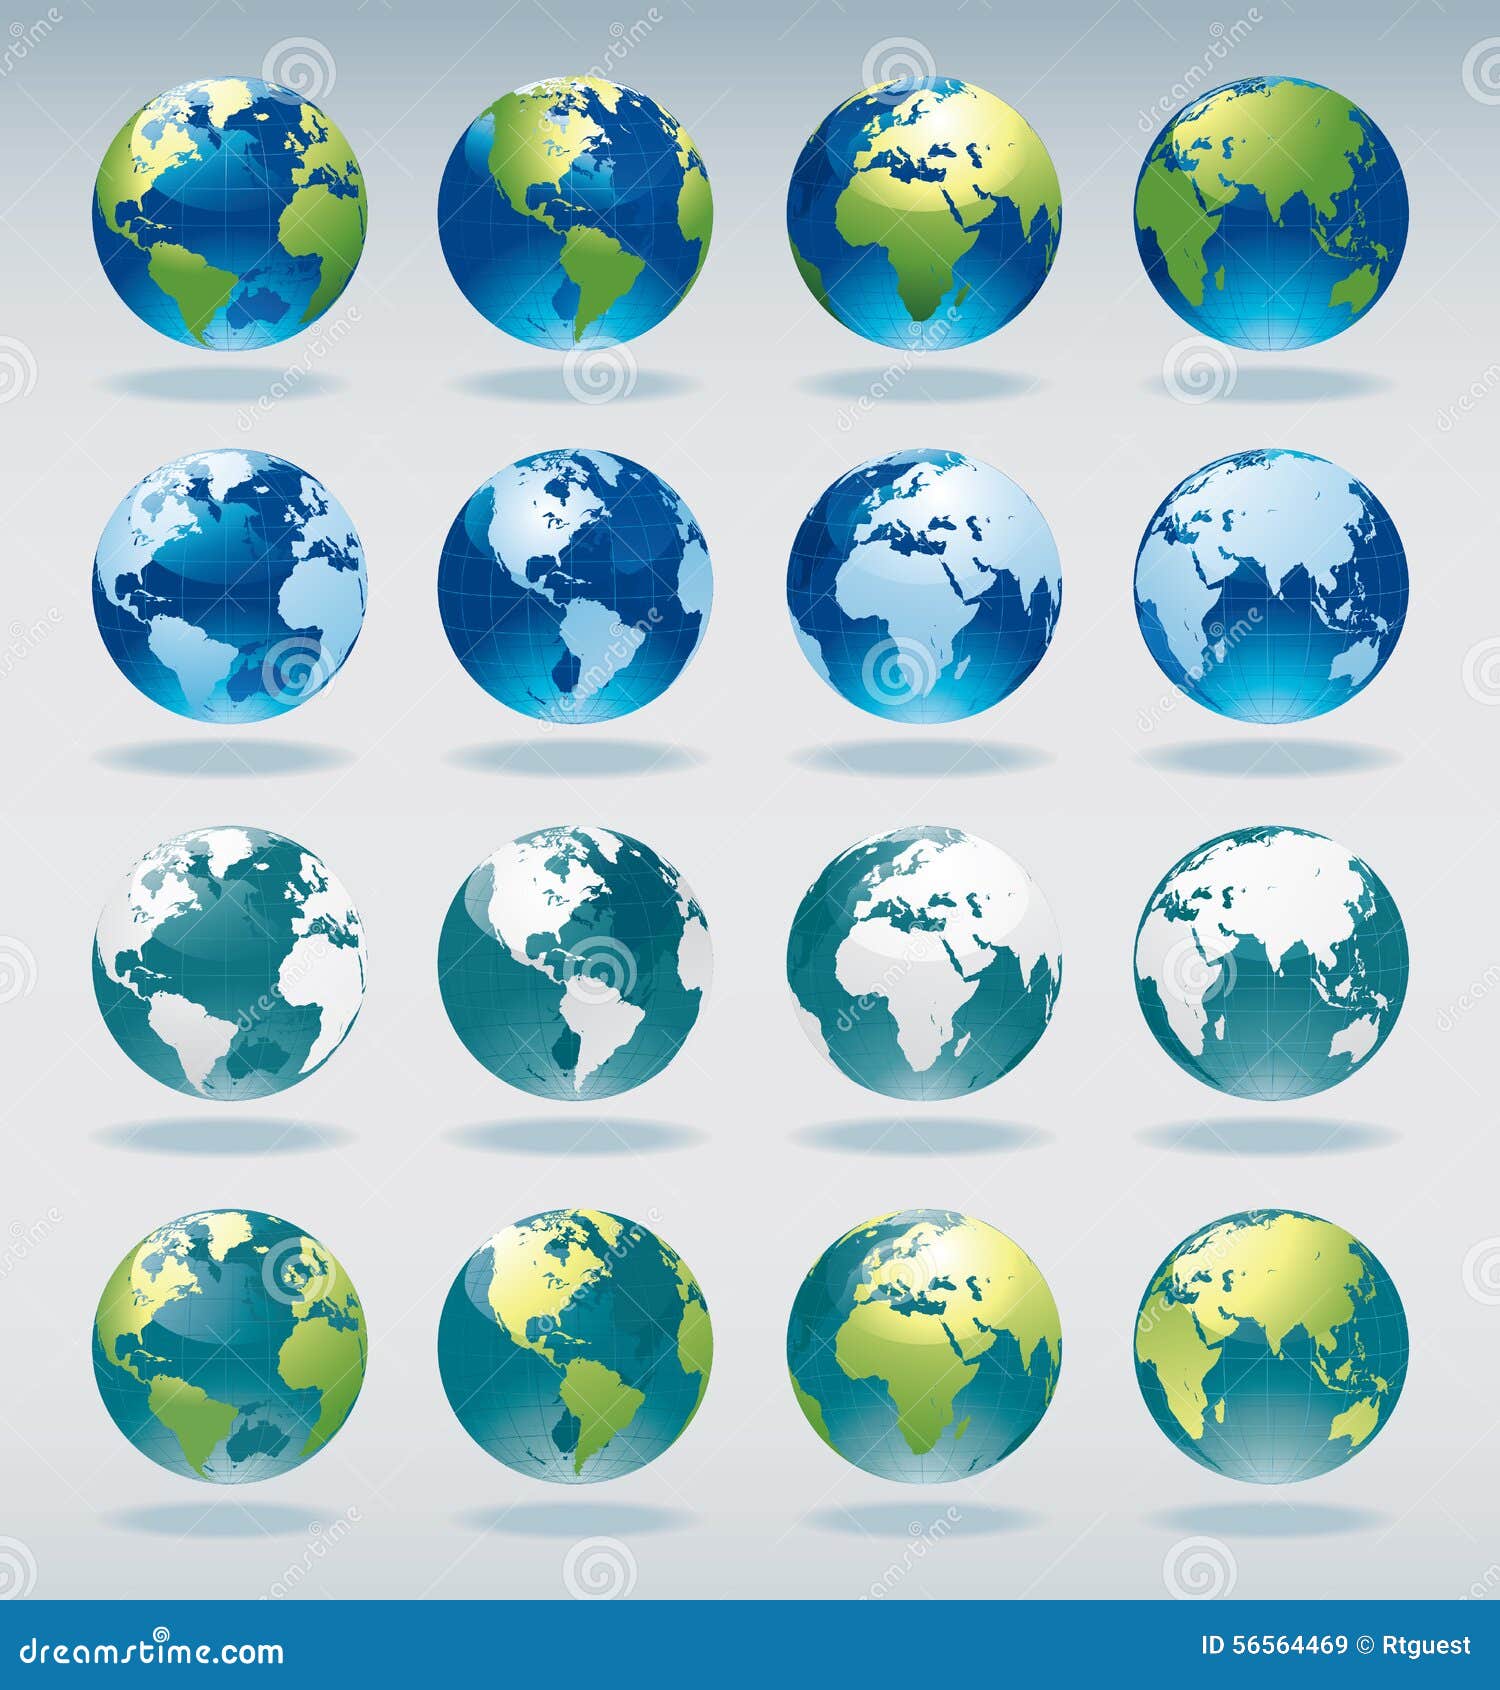 world globe maps